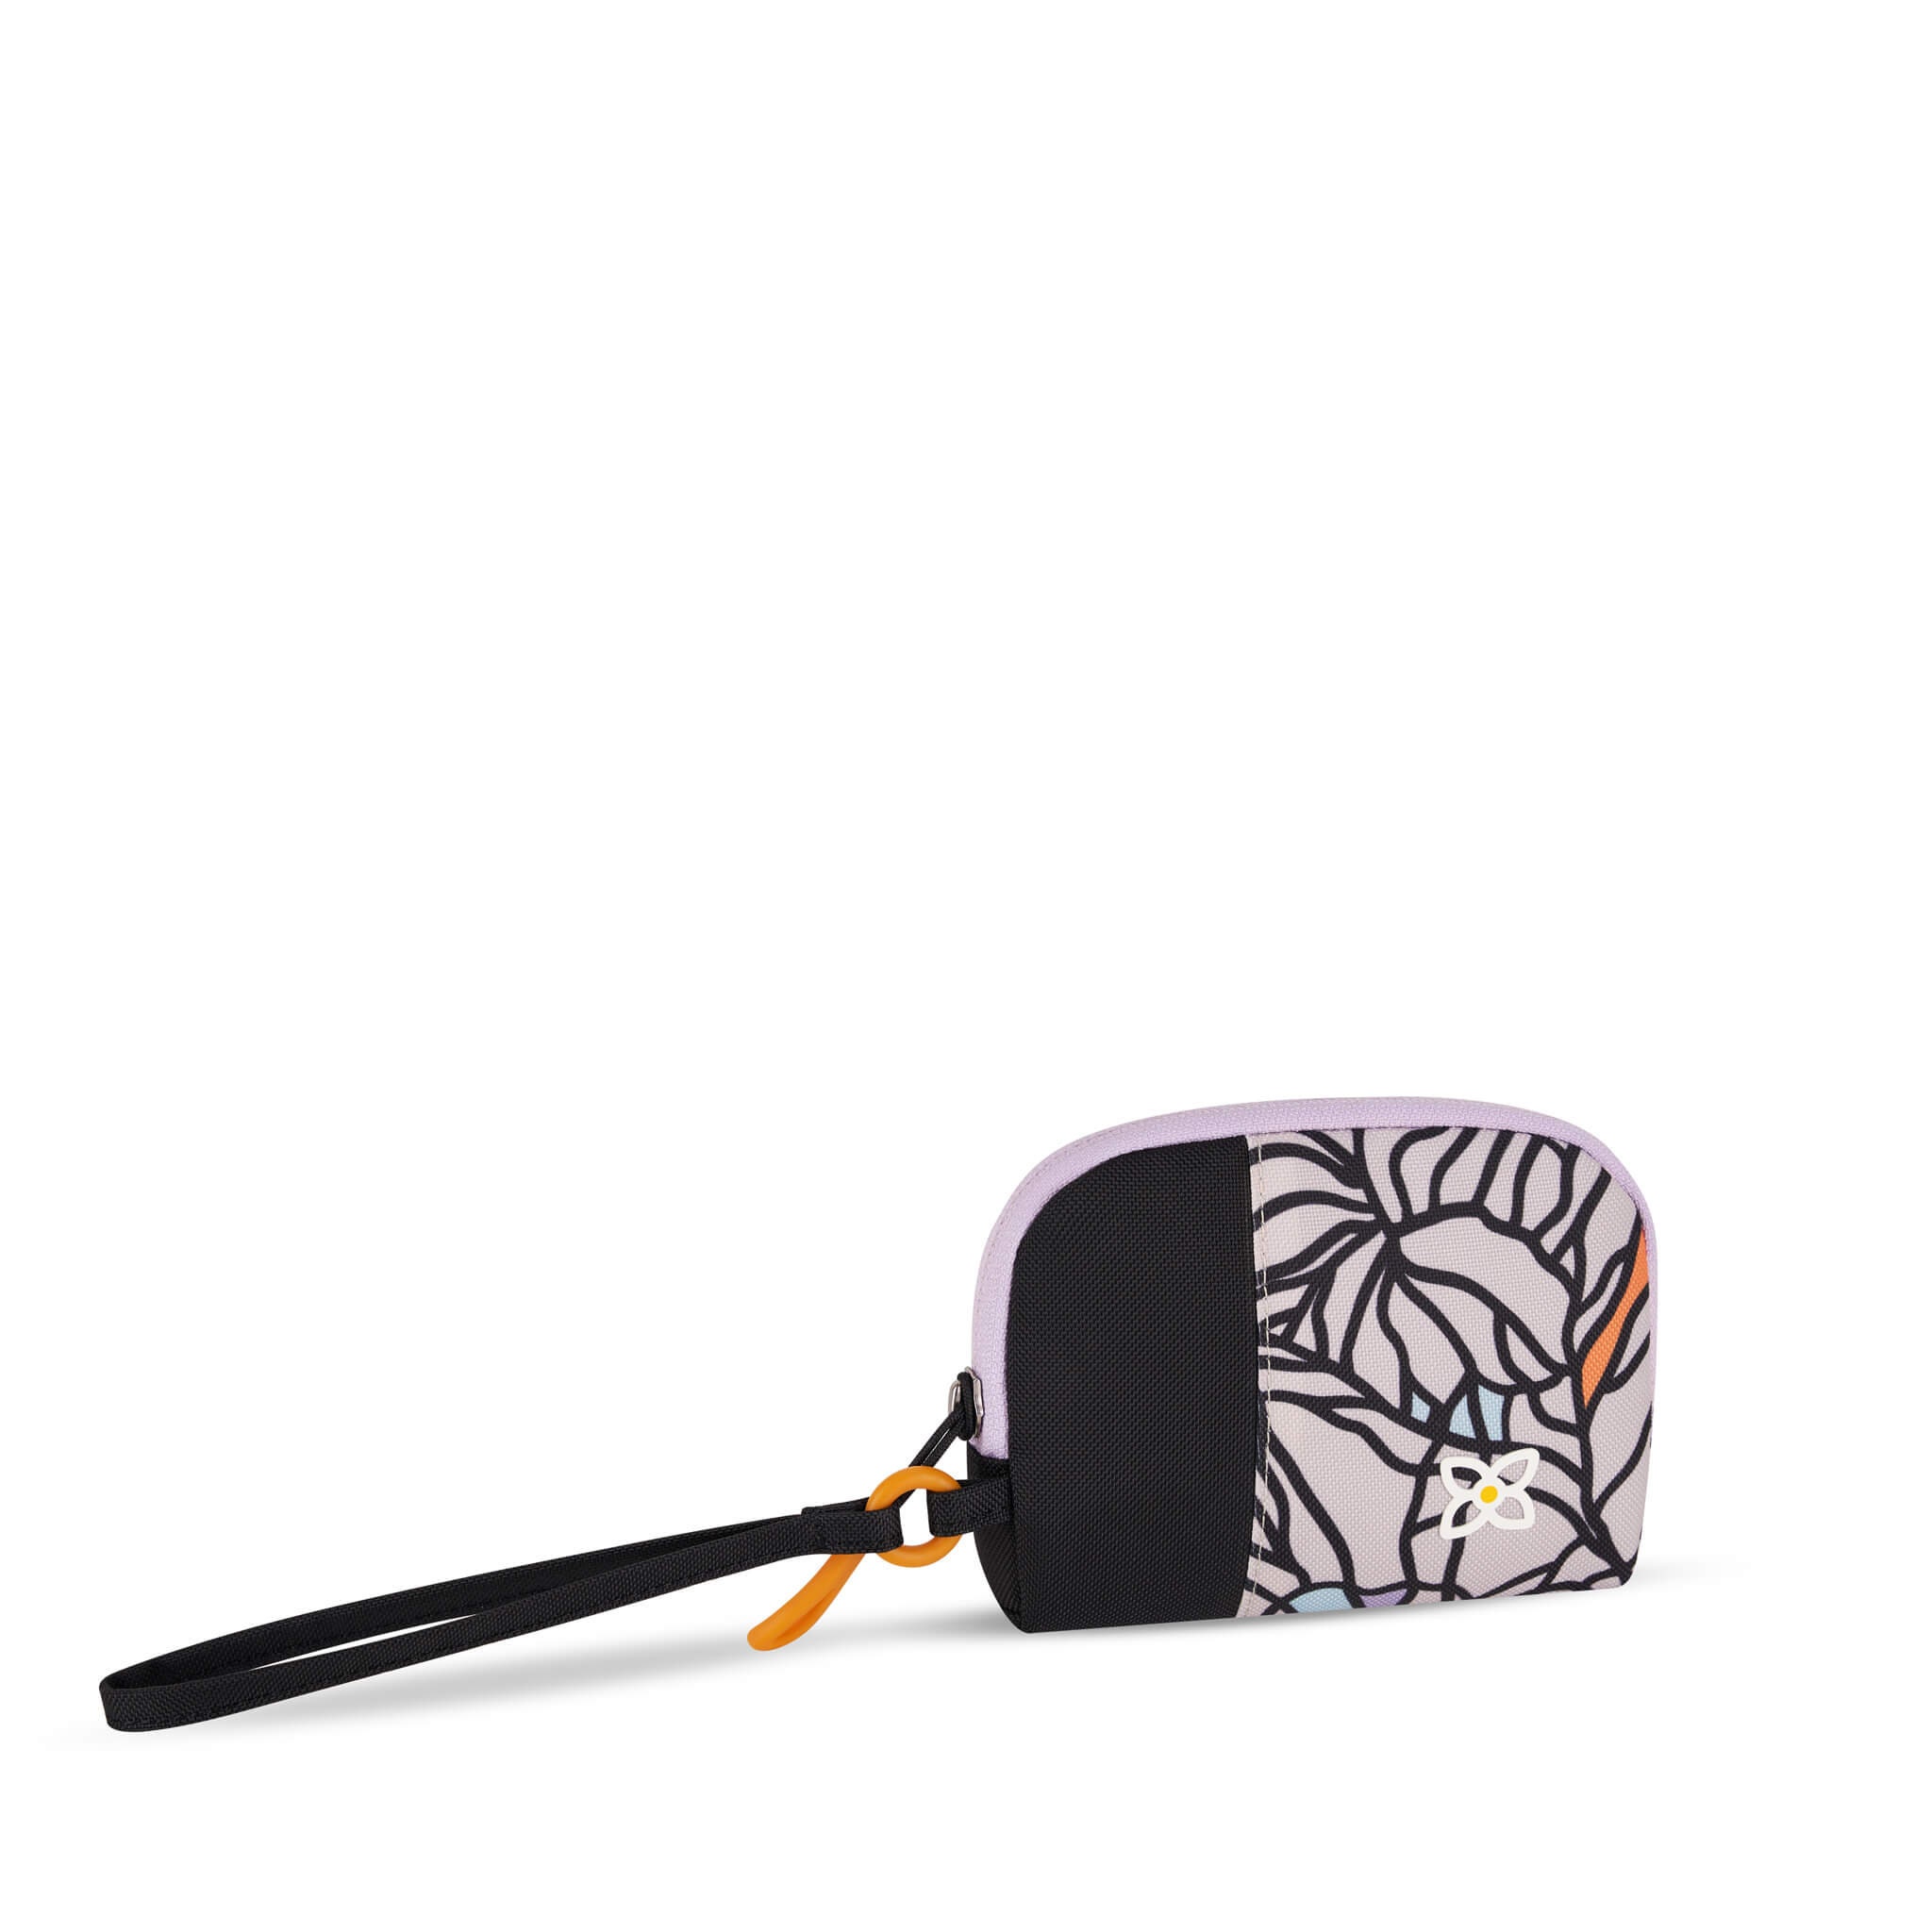 Goth Glam Pencil, Wallet, Make-up, Purse Organizer Bag With a